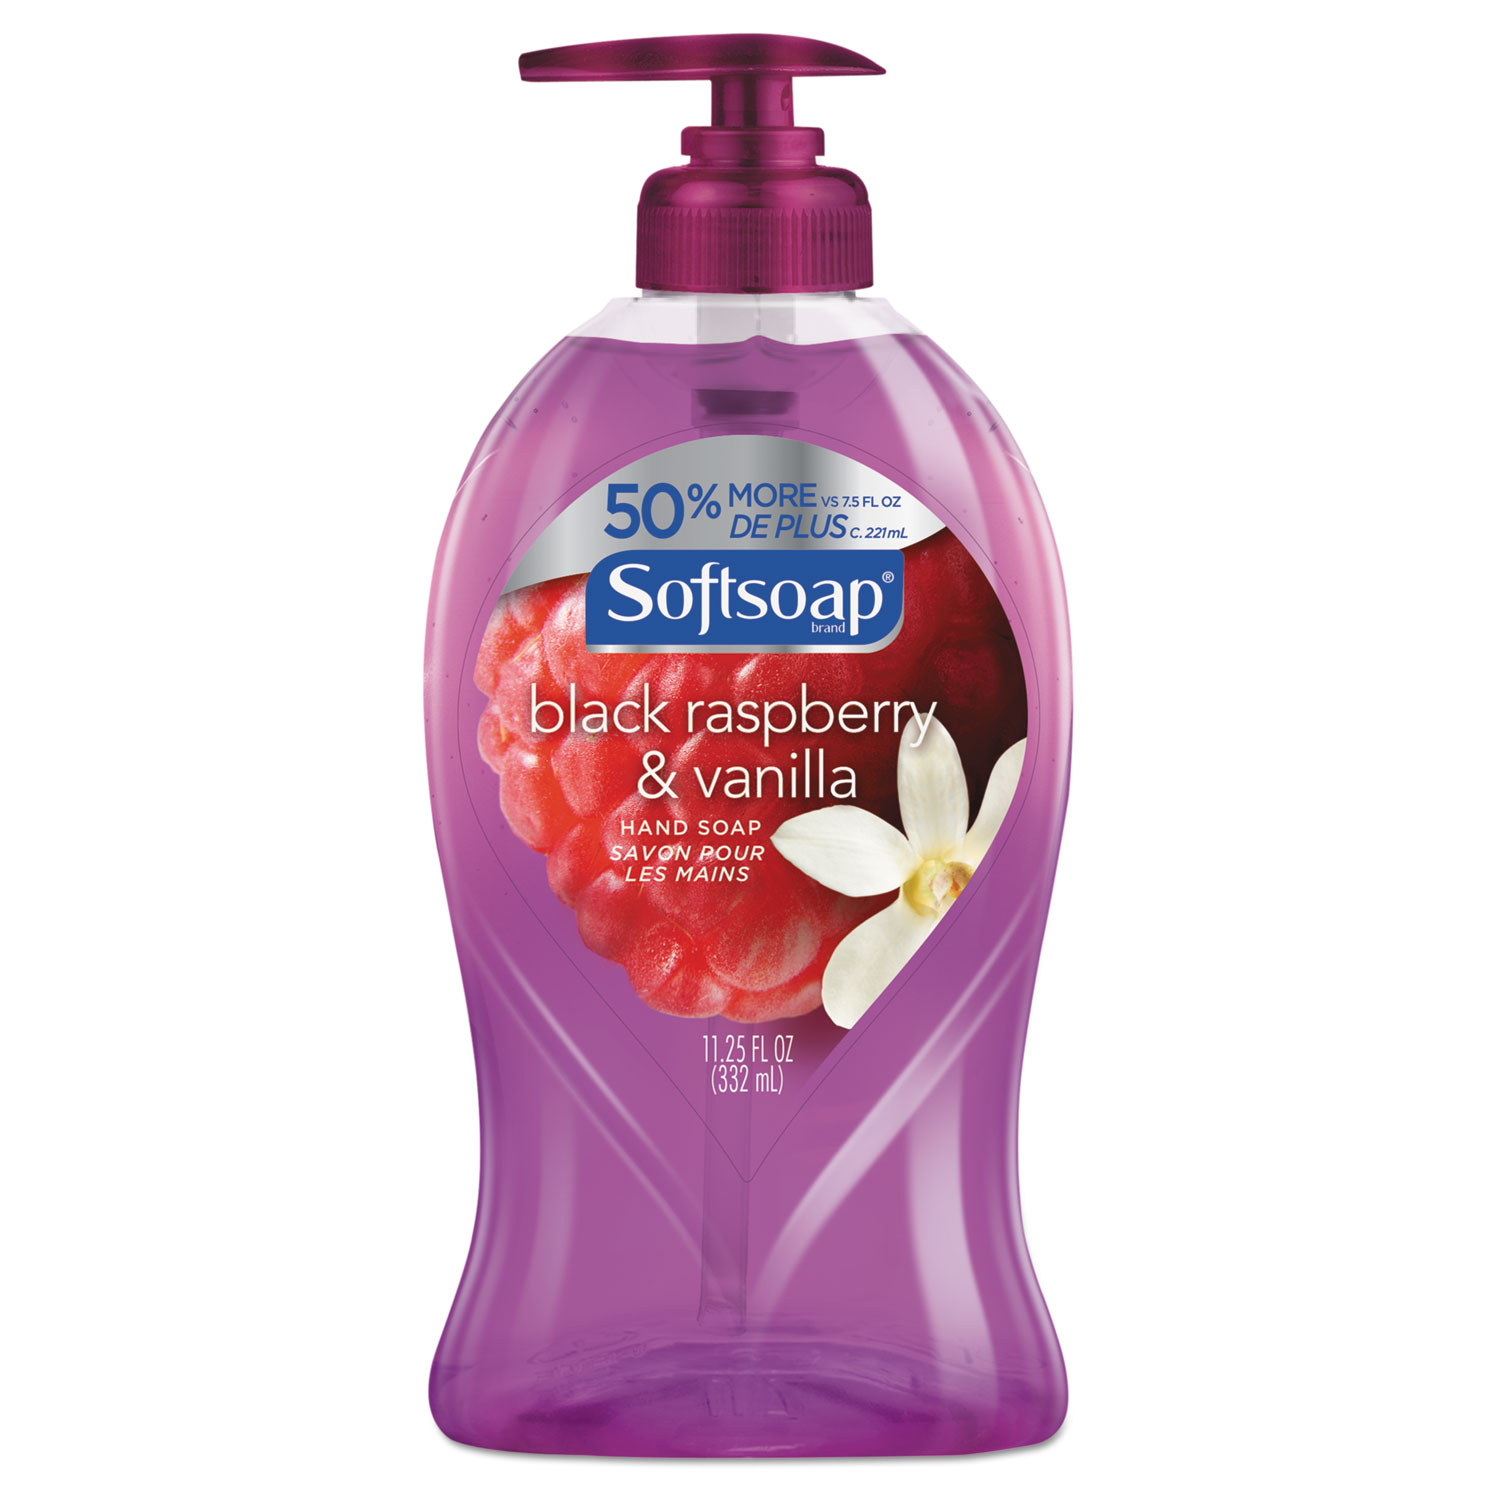  Softsoap US03573A Liquid Hand Soap Pump, Black Raspberry & Vanilla, 11 1/4 oz Pump Bottle, 6/Ctn (CPC44575) 